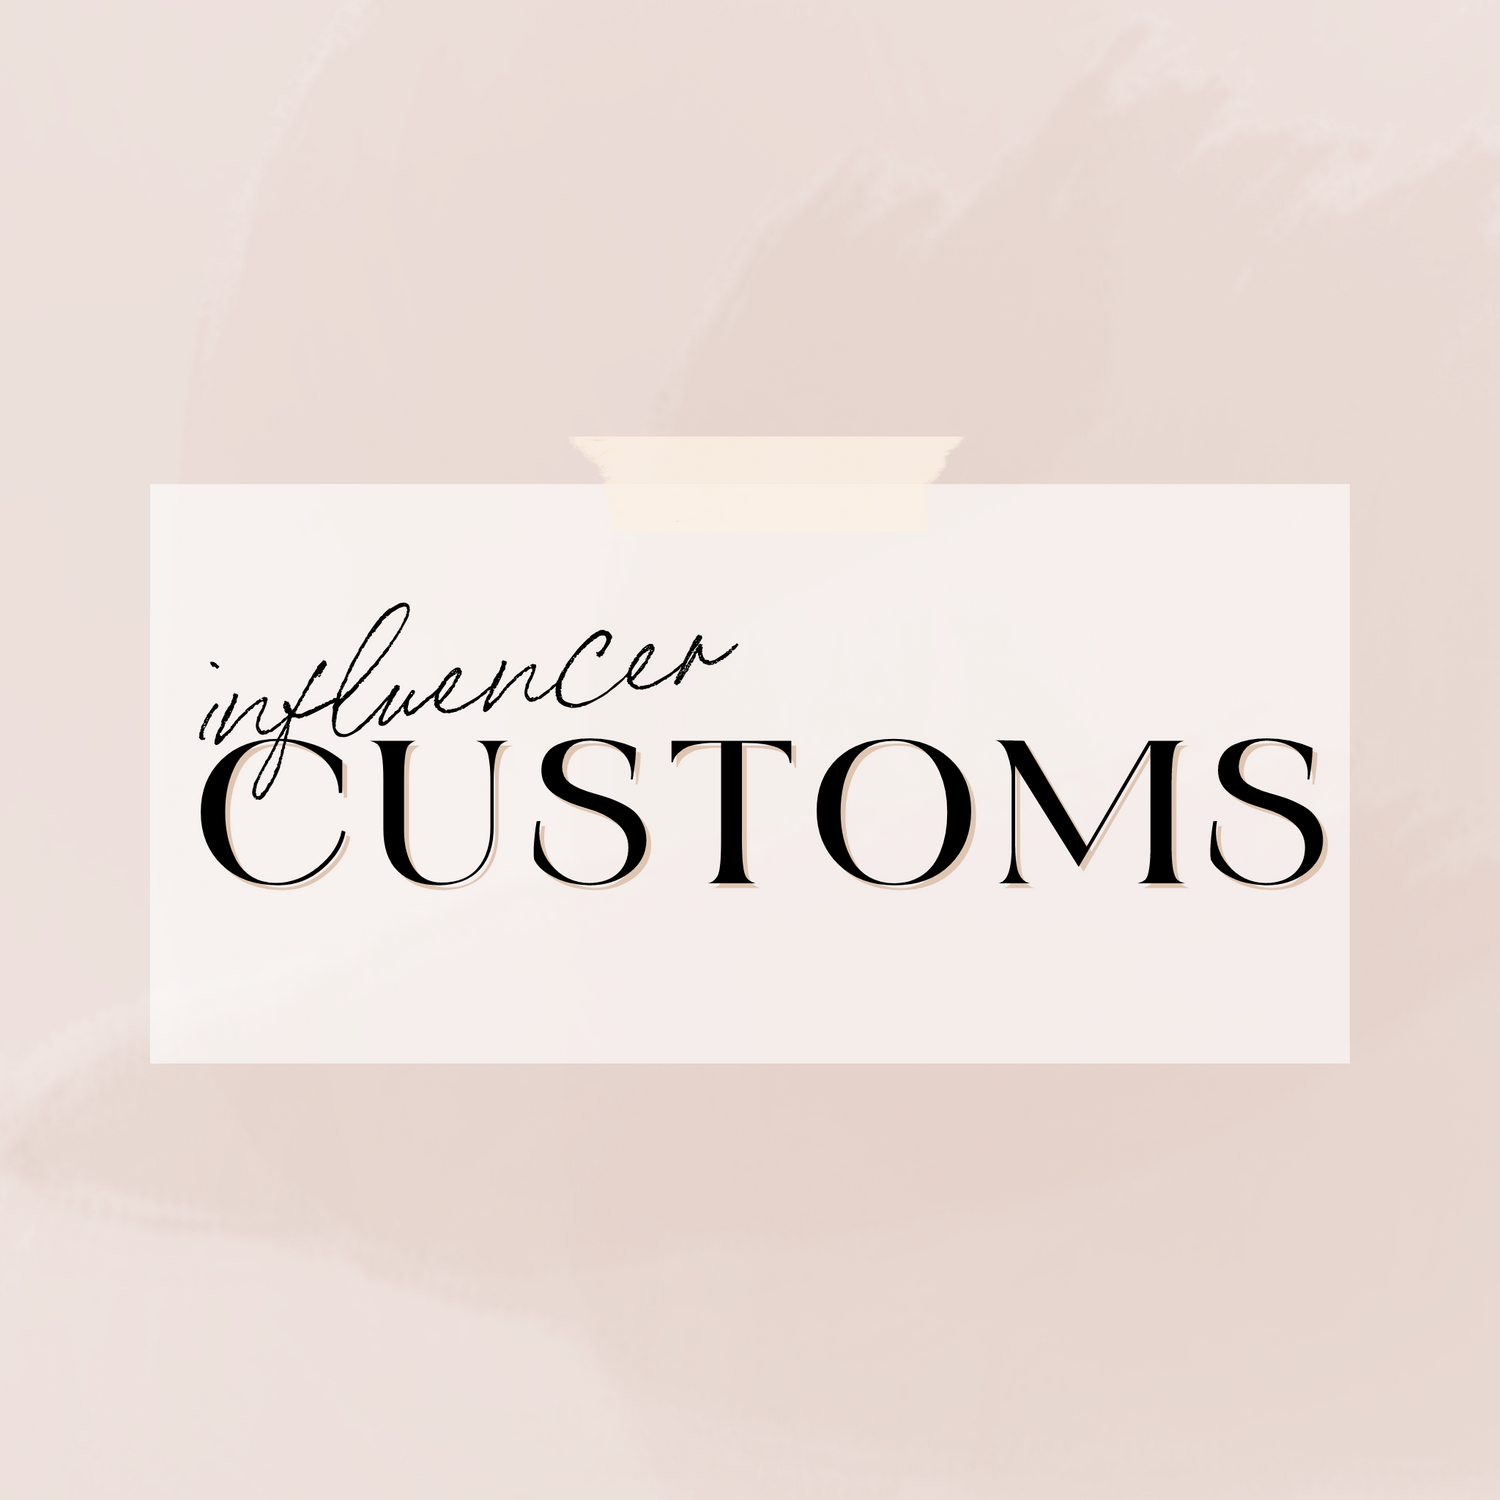 Influencer Customs